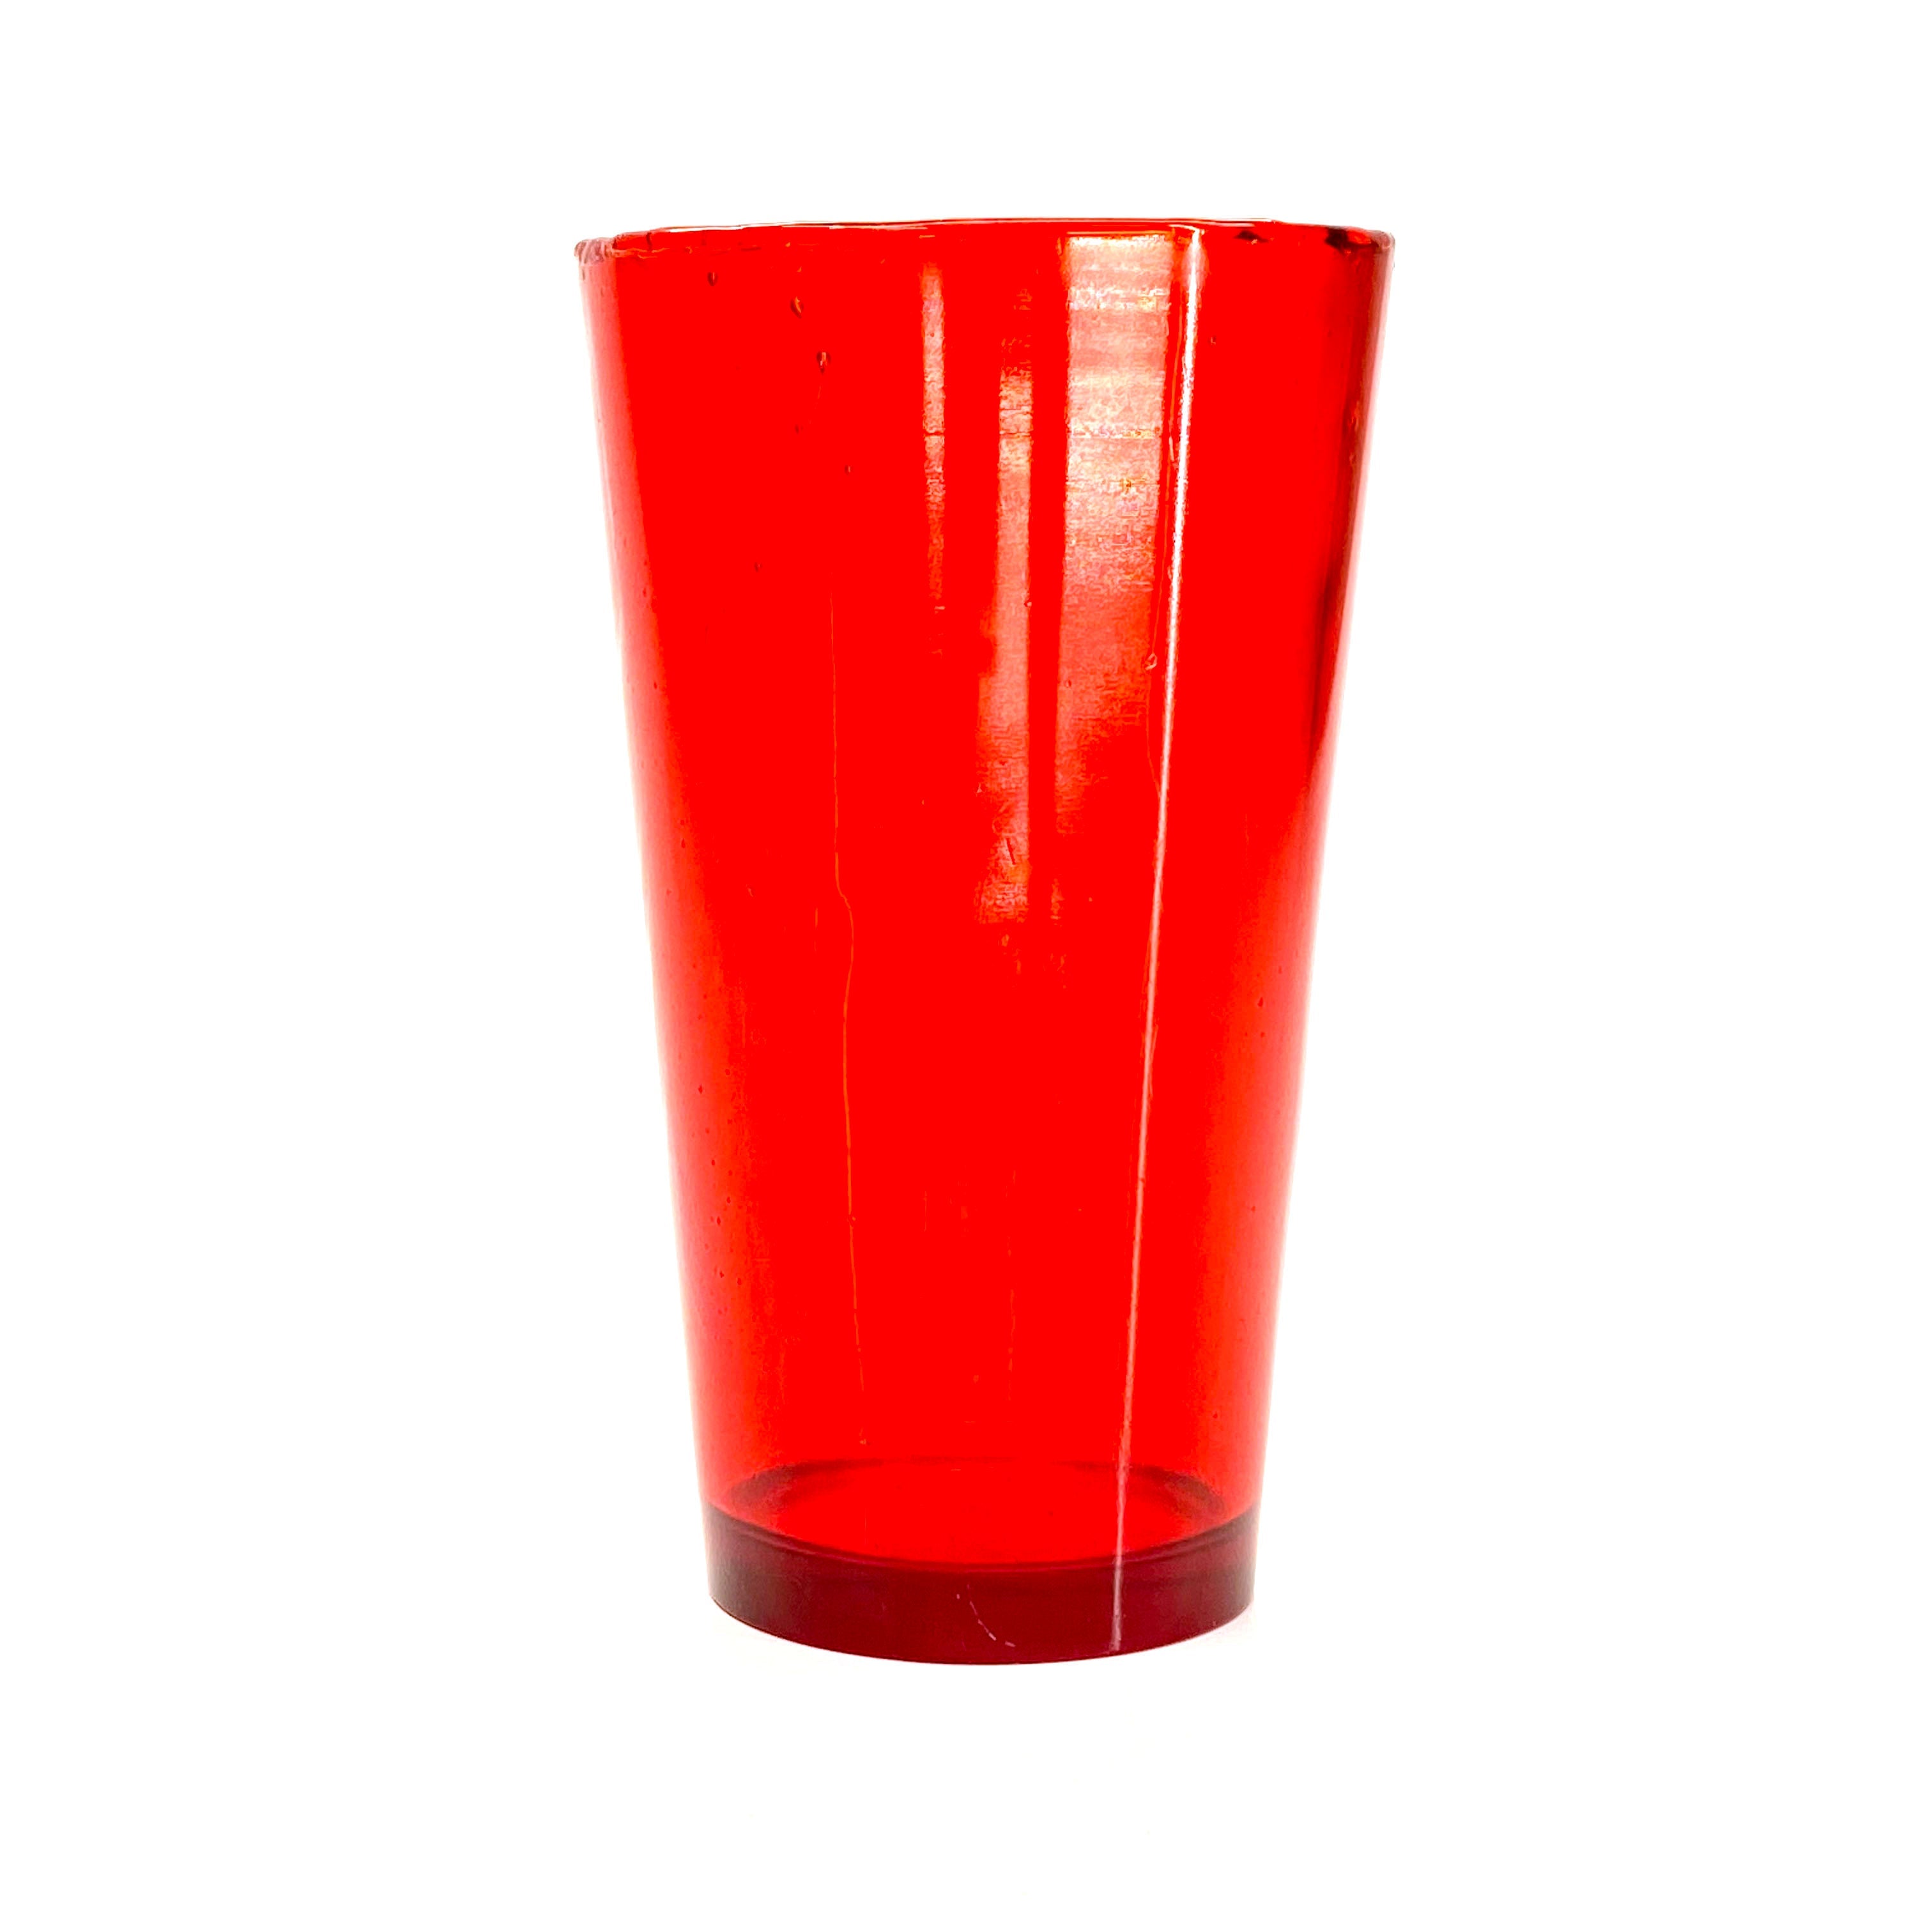 SMASHProps Breakaway Beer Pint Glass Prop - RED translucent - Red Translucent